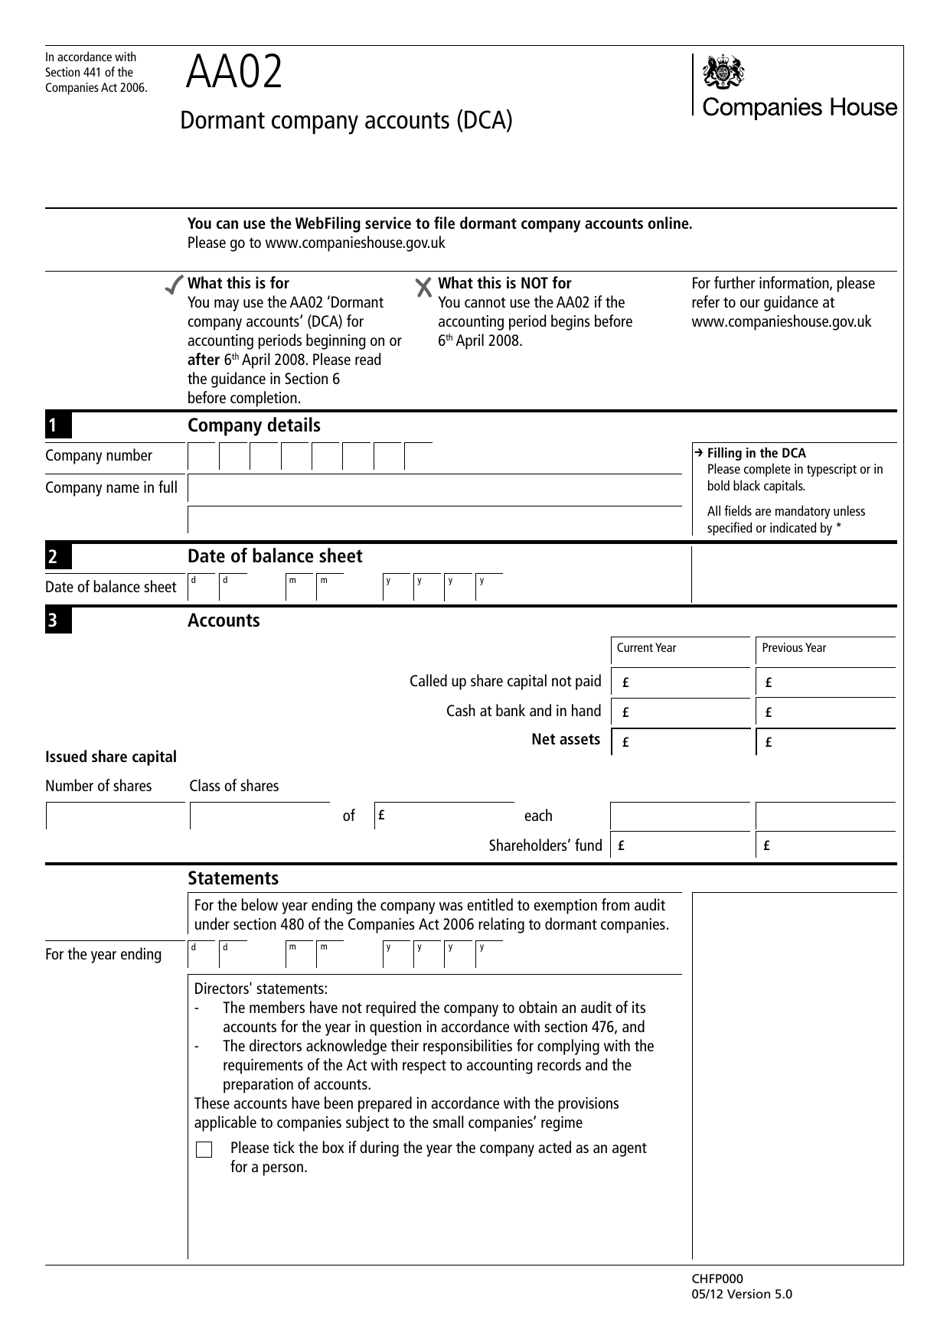 Form AA02 Dormant Company Accounts (Dca) - United Kingdom, Page 1